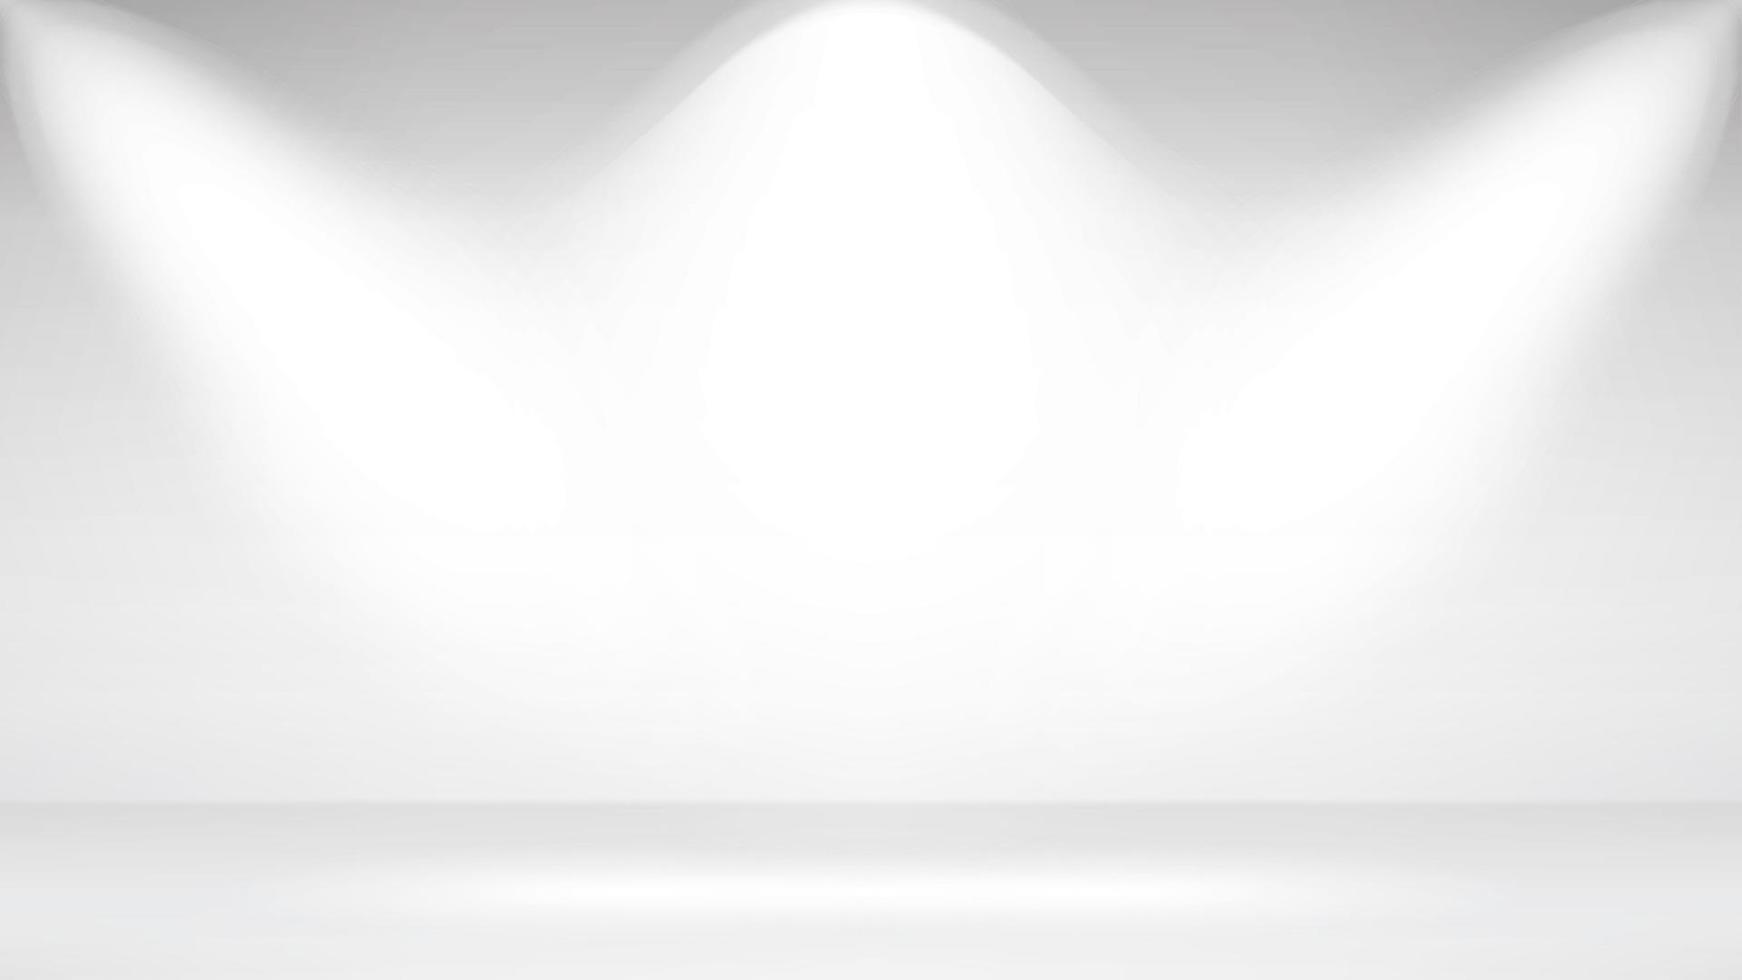 Photo Studio Room. Empty White Interior. Realistic Spotlight Lamps. Vector Illustration.